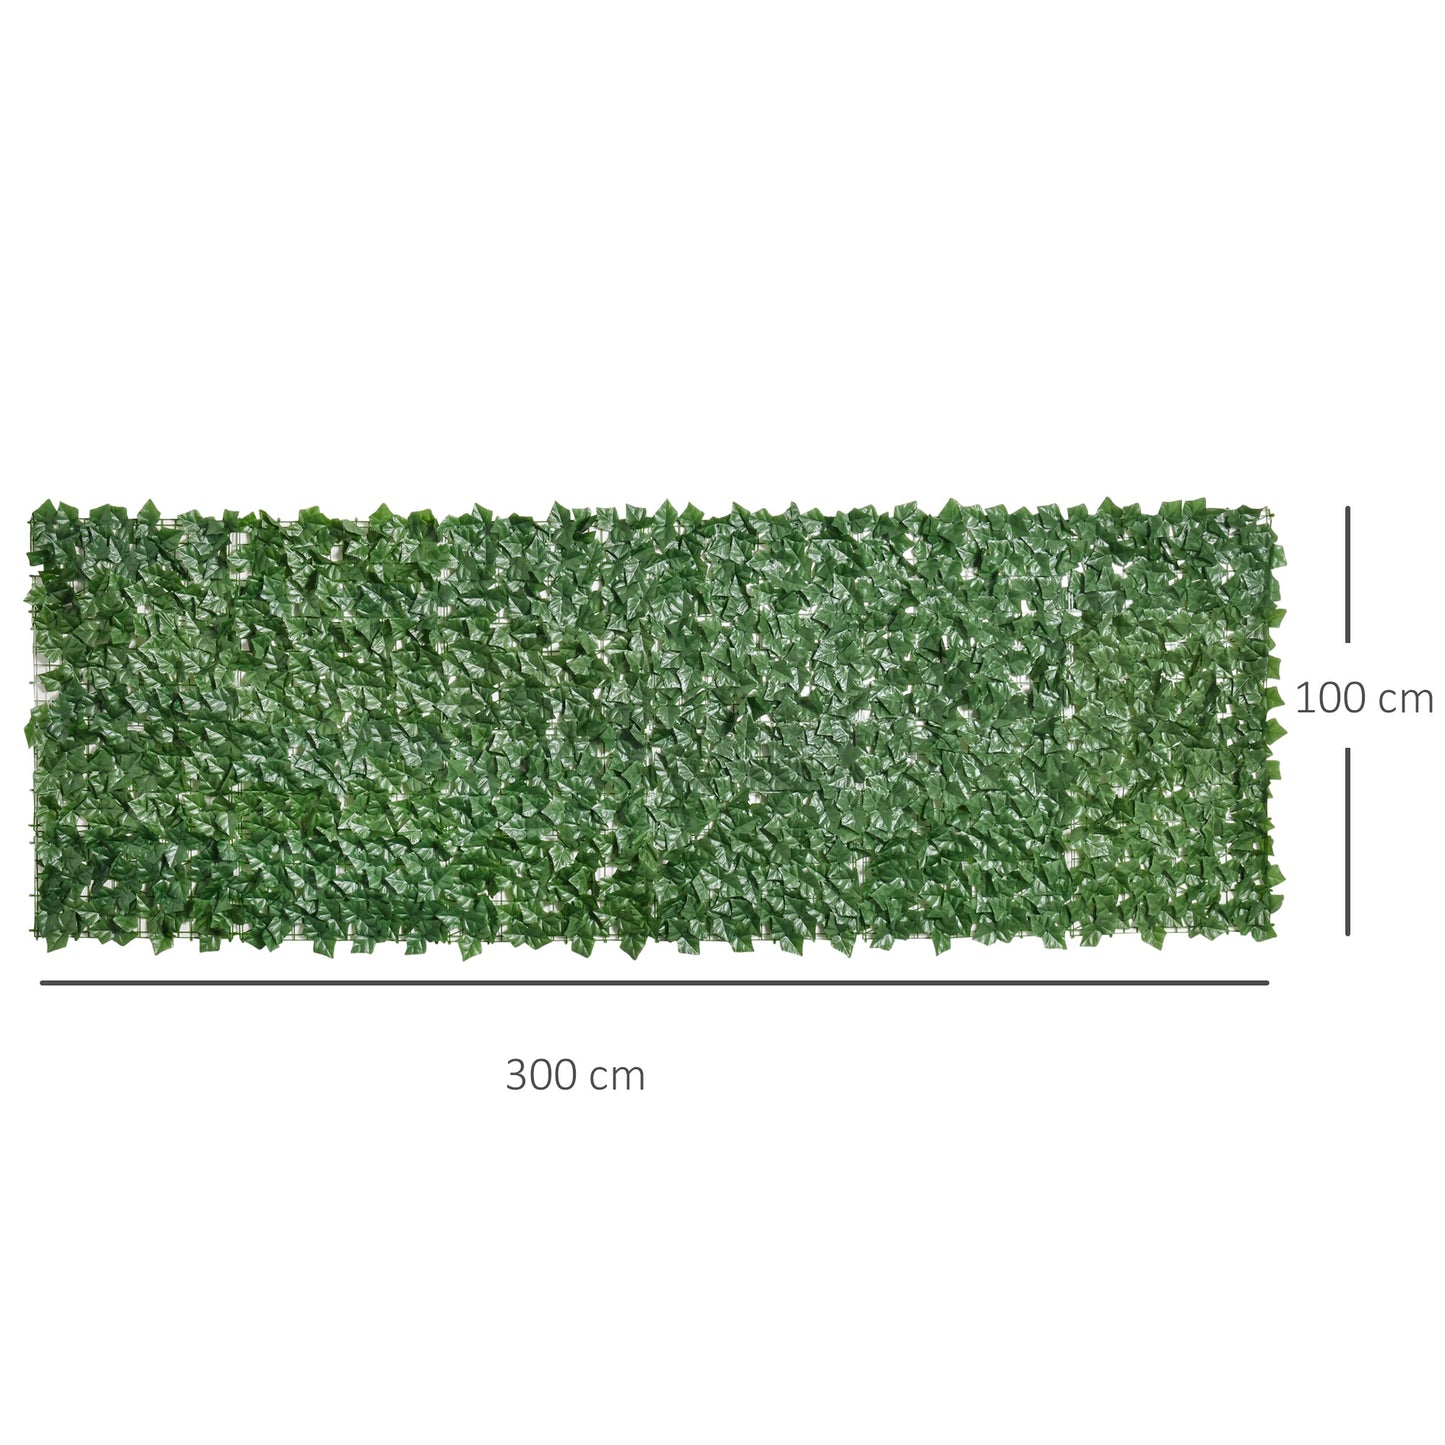 Outsunny Artificial Hedge Screen: Leafy Design for Garden Outdoor Indoor Décor, 3M x 1M, Deep Green